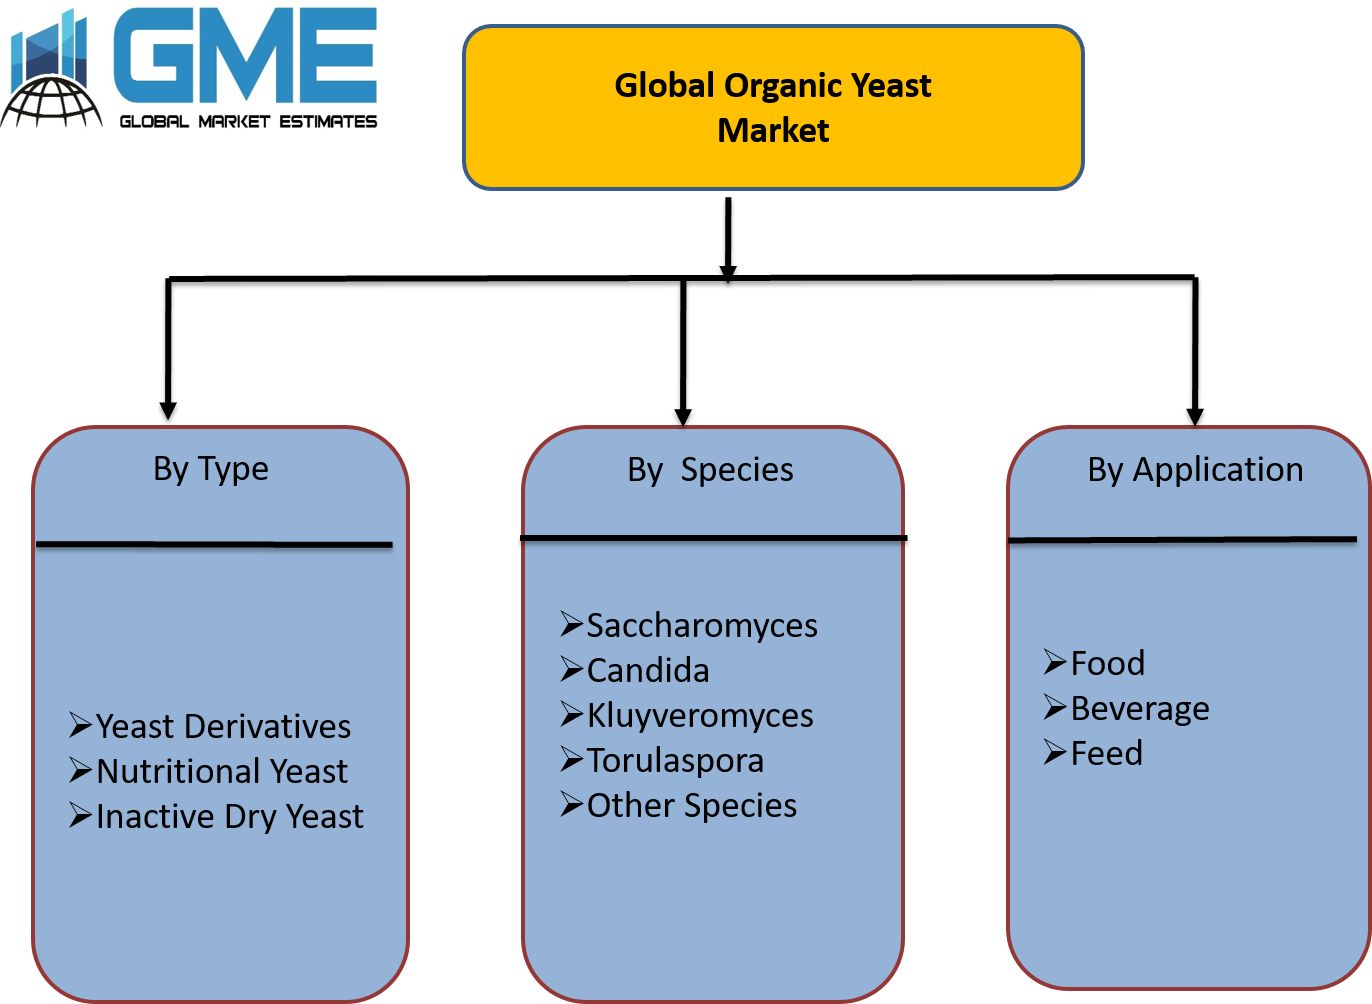 Global Organic Yeast Market Segmentation